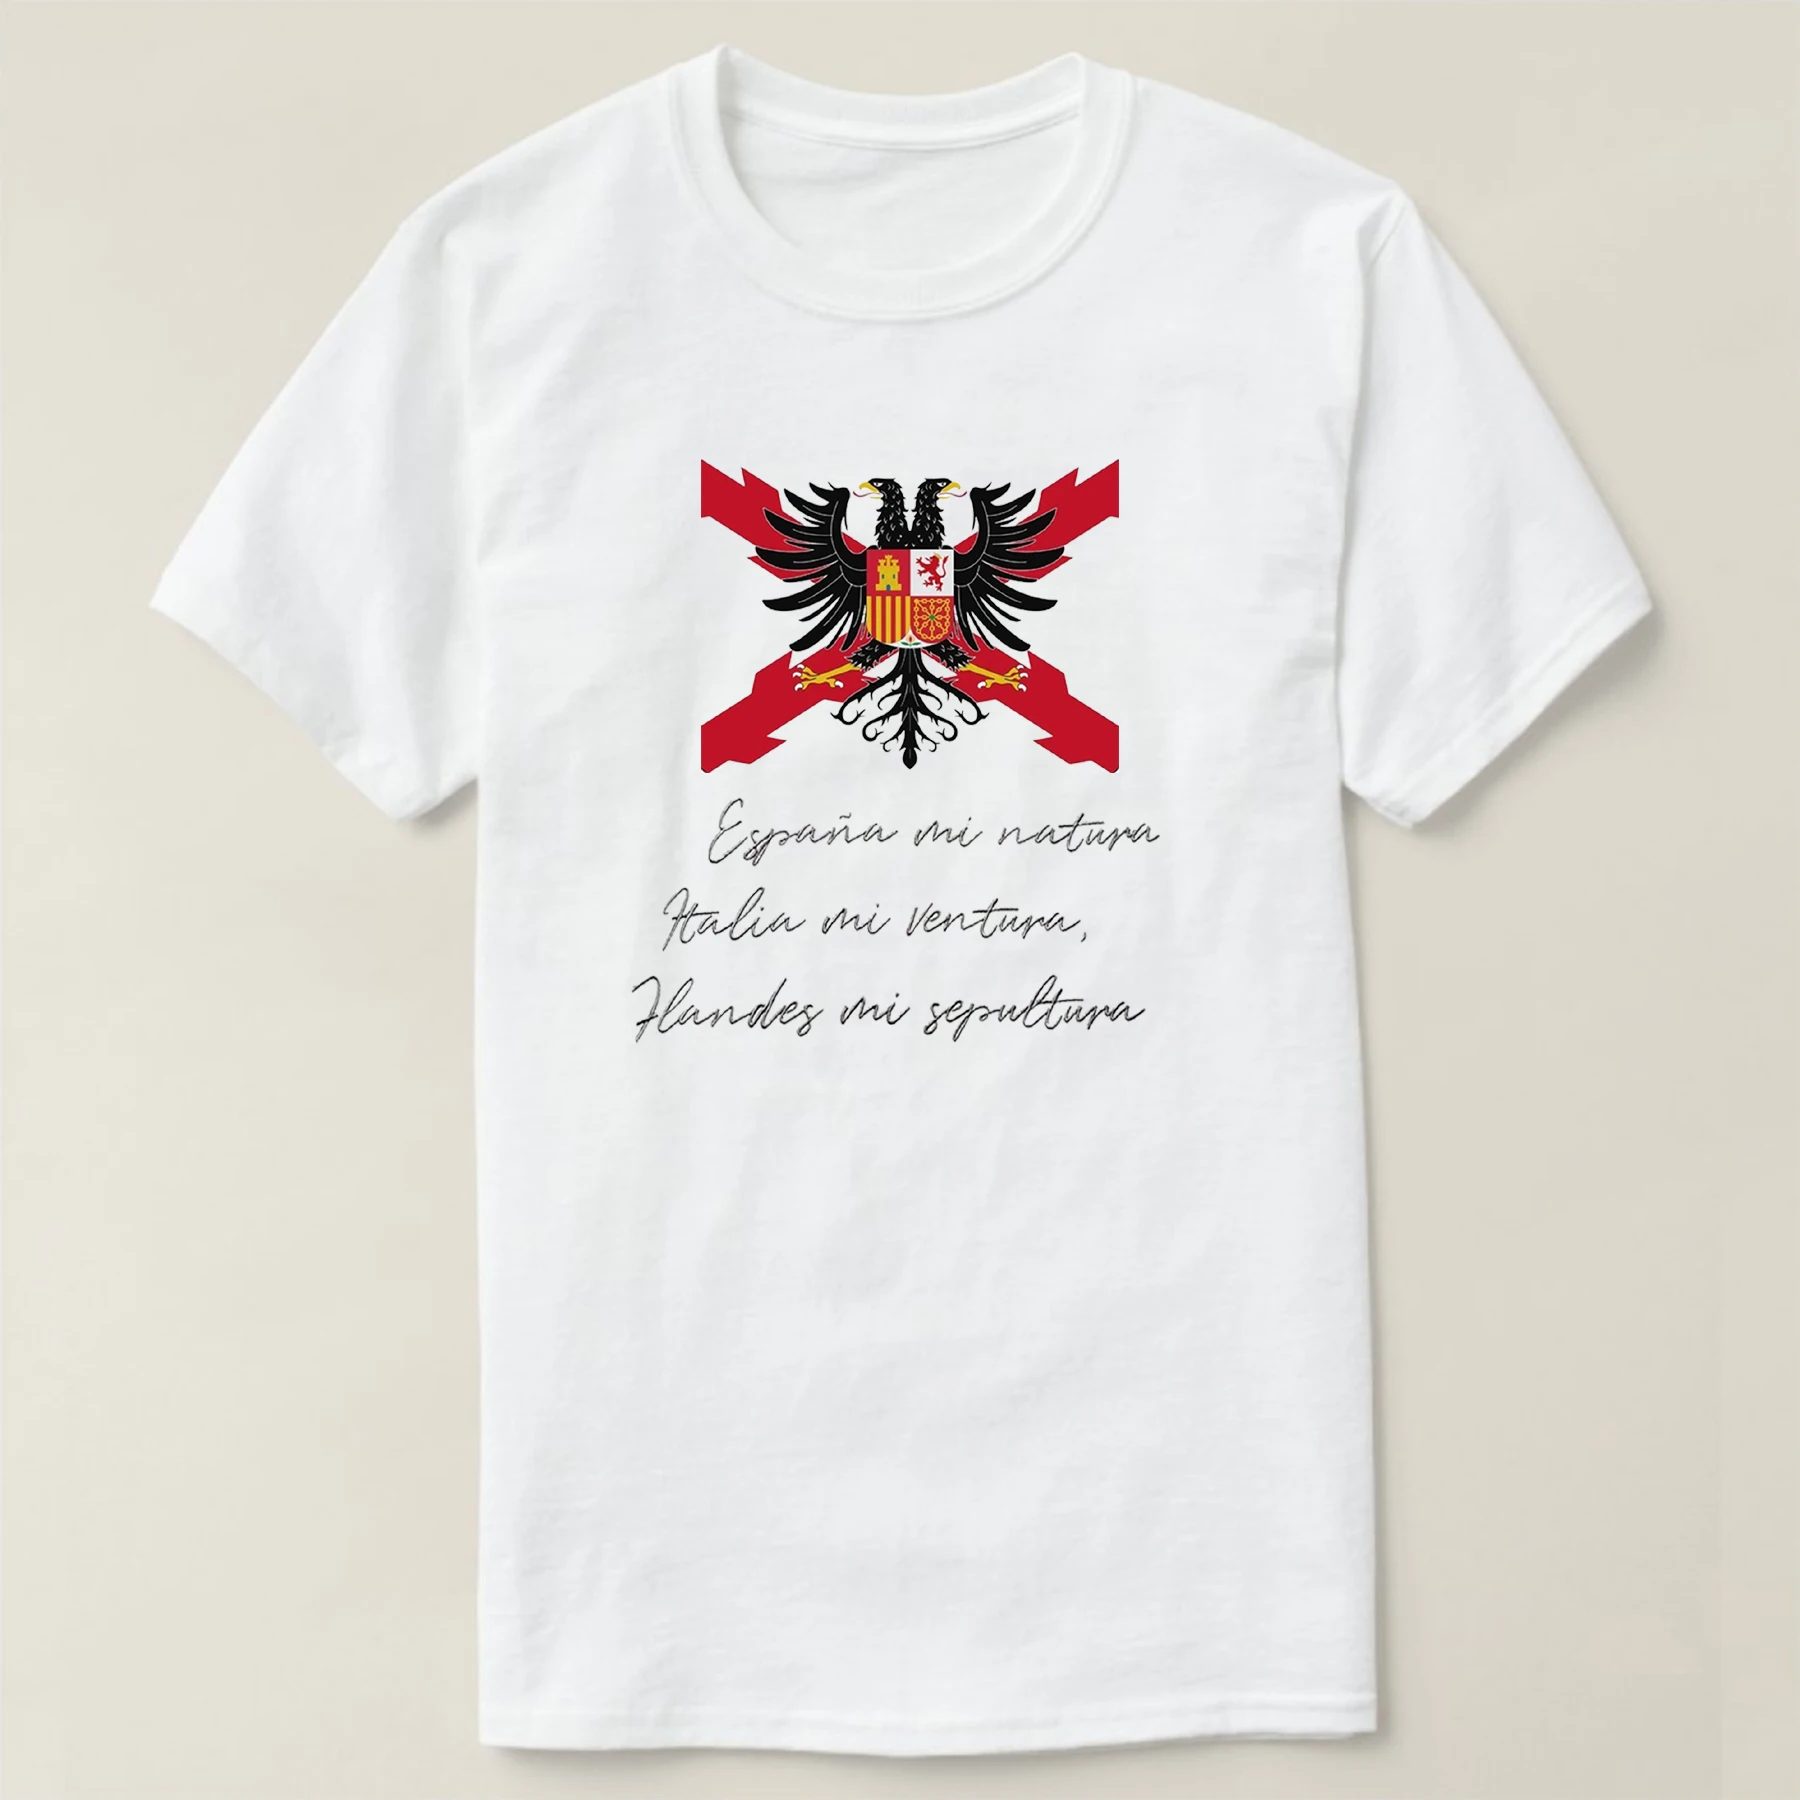 

Spanish Army Flandes Tercios Motto Burgundy Cross Eagle Badge T Shirt New 100% Cotton Short Sleeve O-Neck Tshirt Casual Mens Top